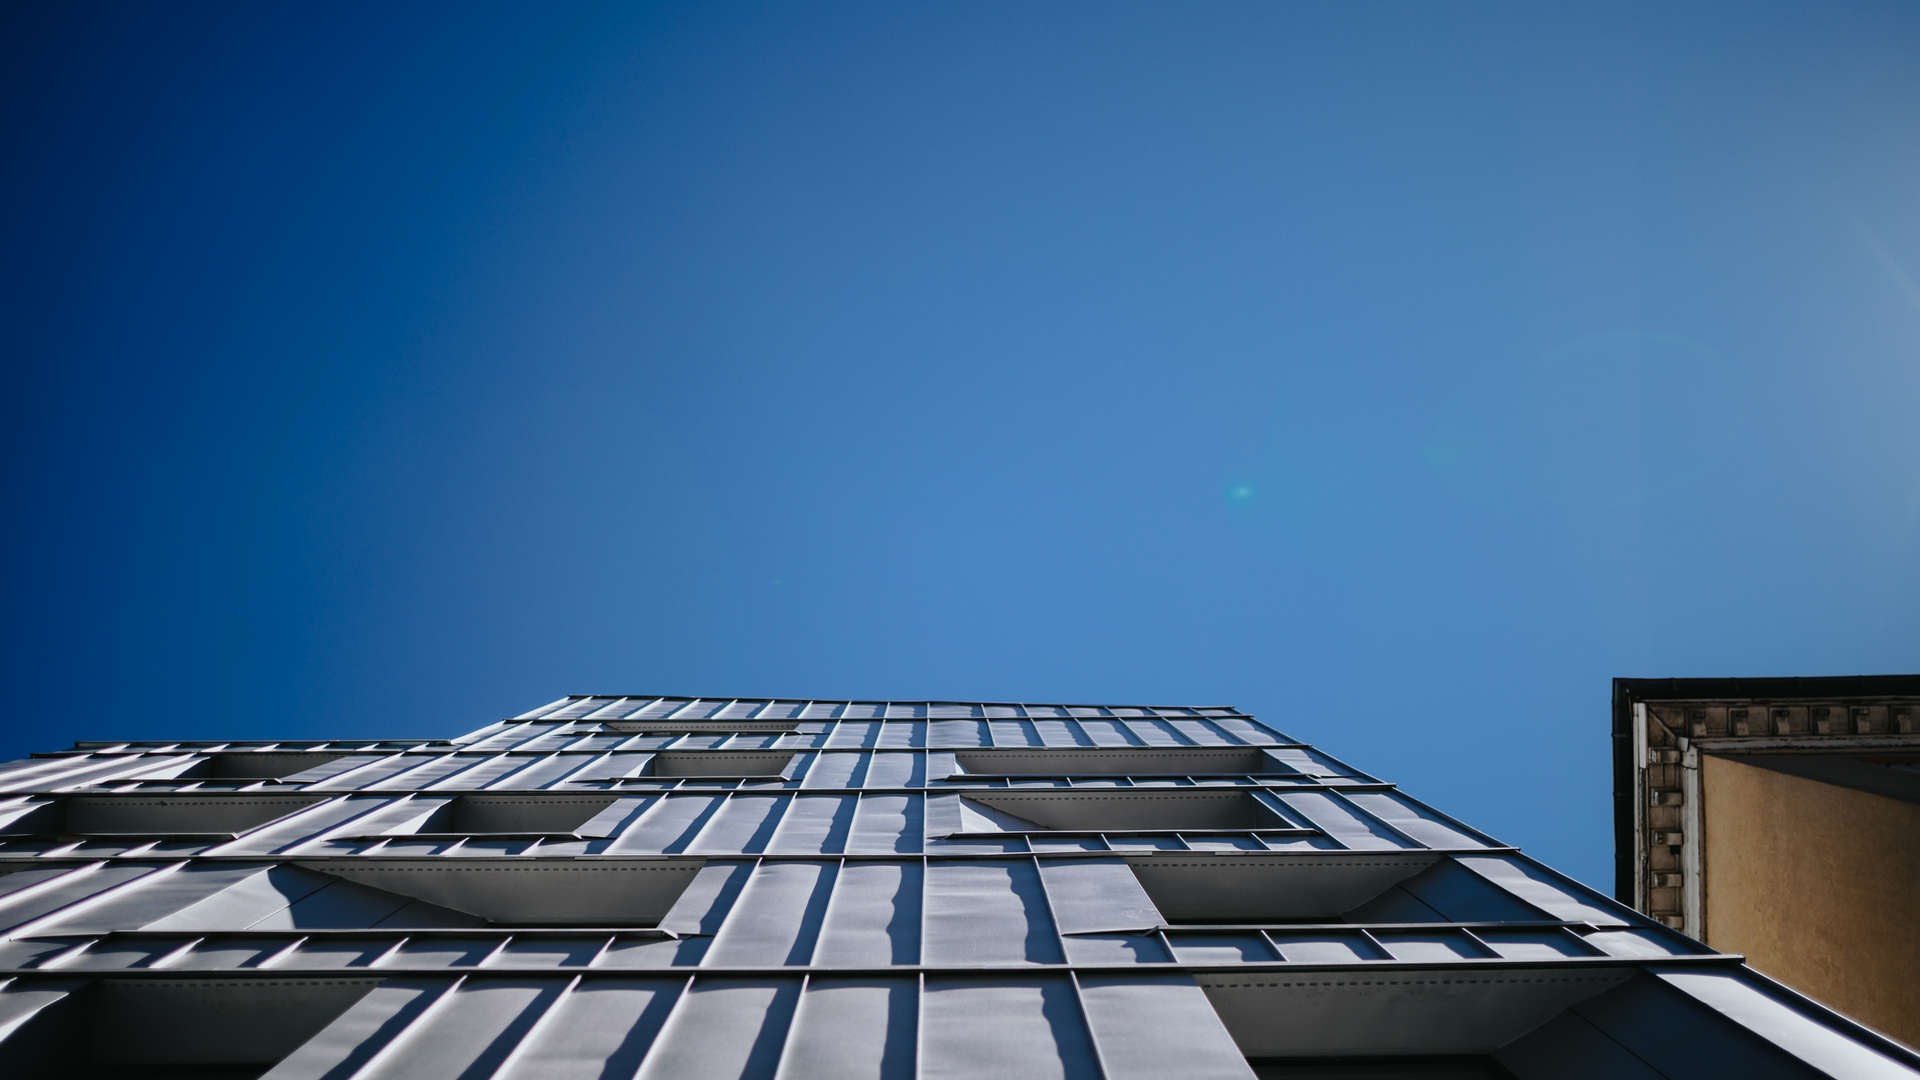 façade de l'hôtel boutique de Lyon contre un ciel bleu en face